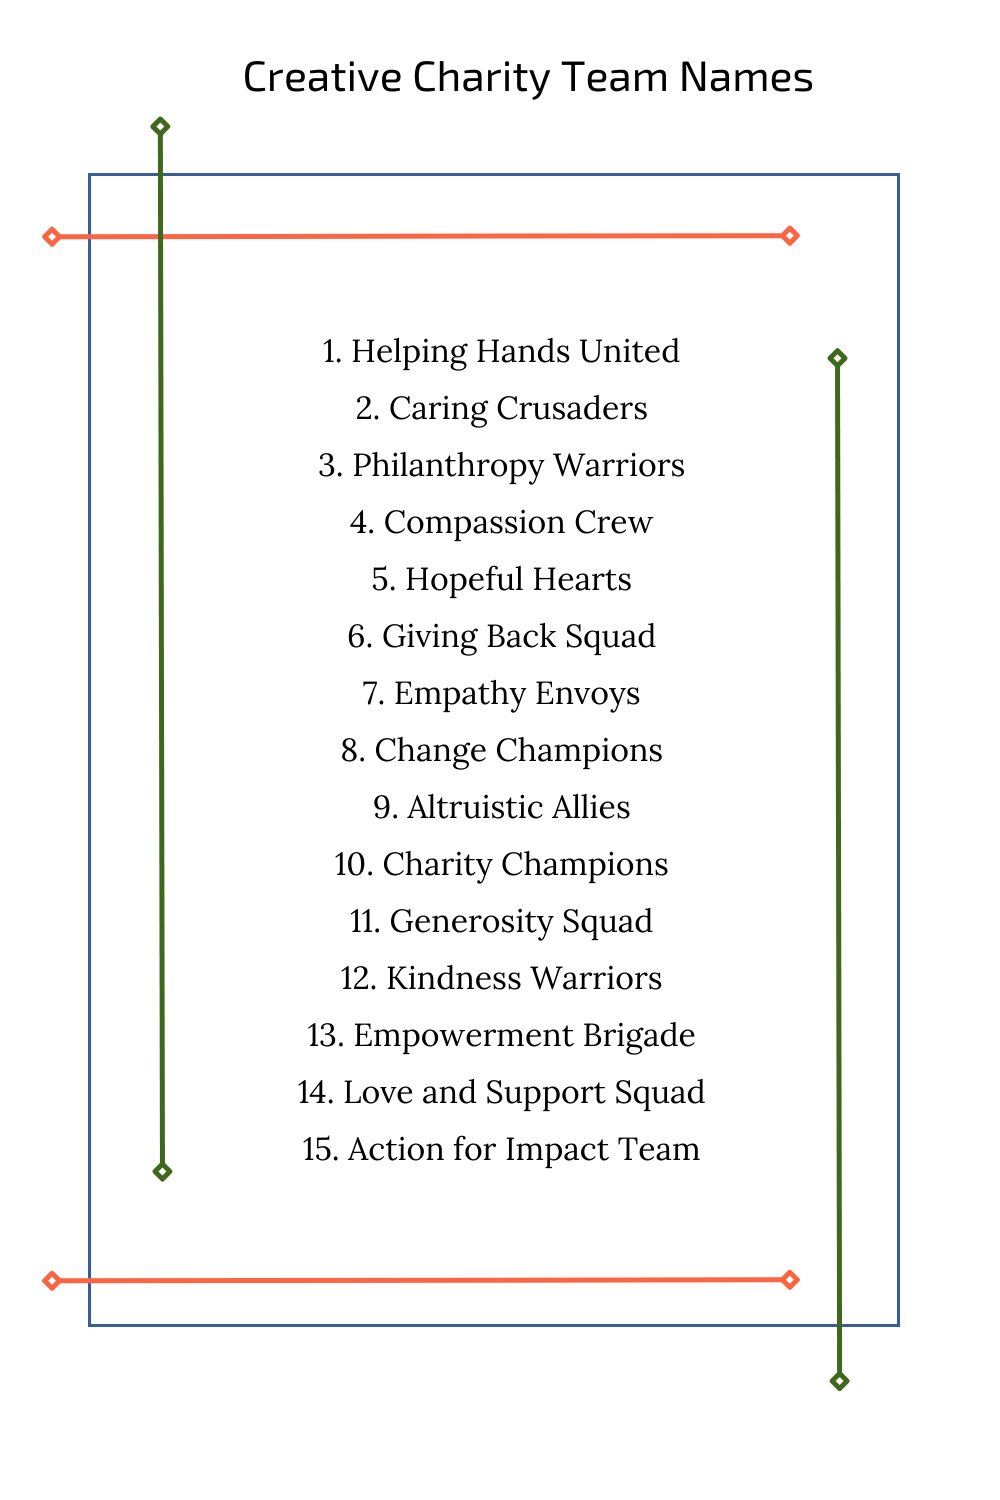 Creative Charity Team Names